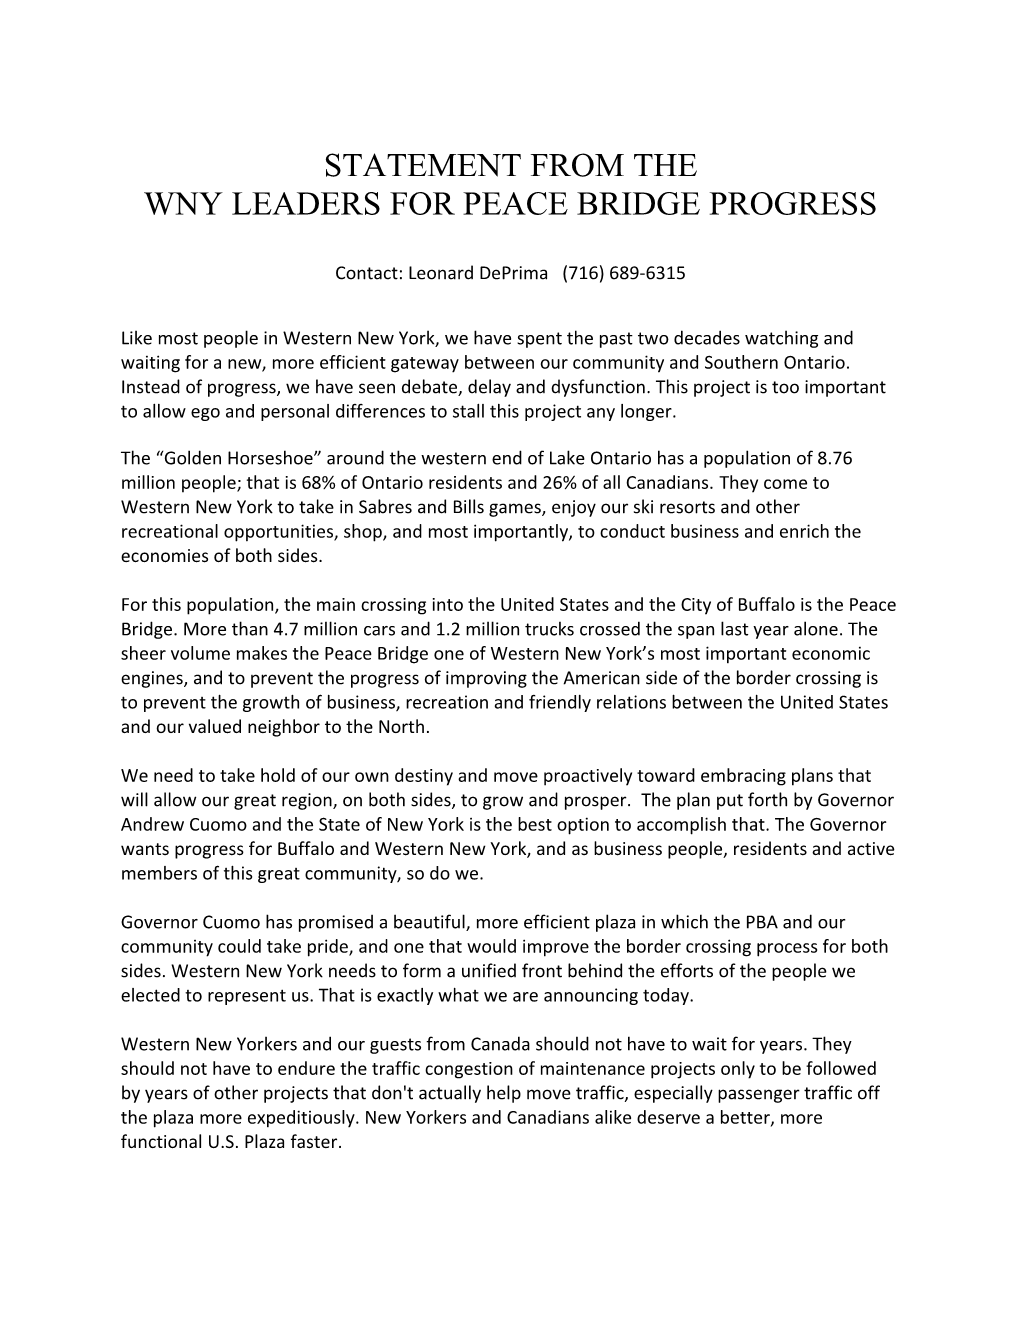 Wny Leaders for Peace Bridge Progress